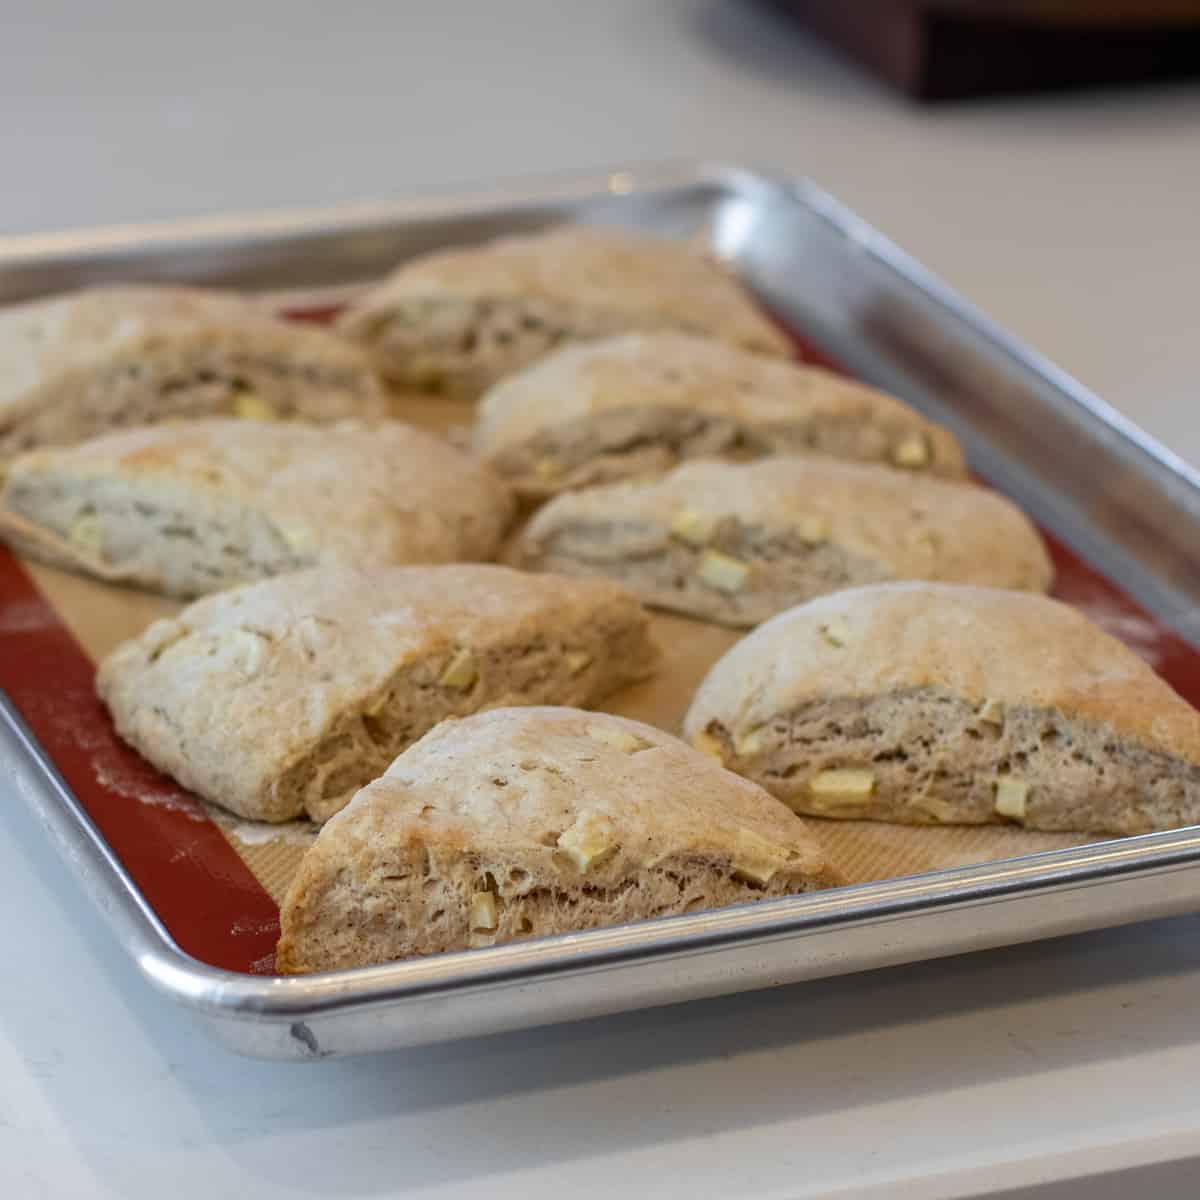 Fresh baked scones on a baking sheet.